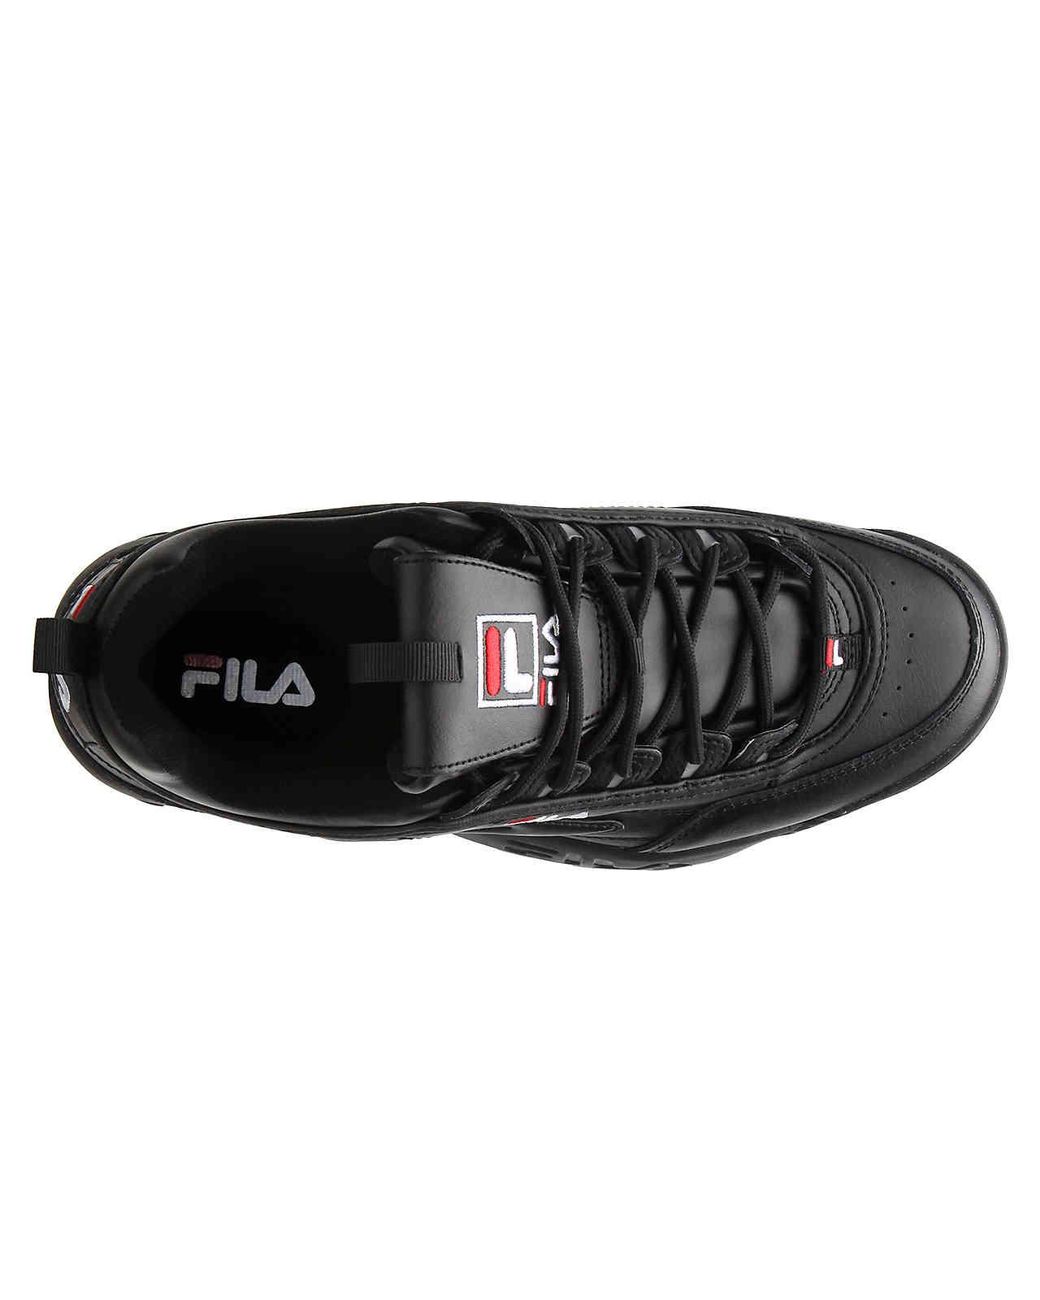 Fila Disruptor Ii Premium Trainers in Black | Lyst